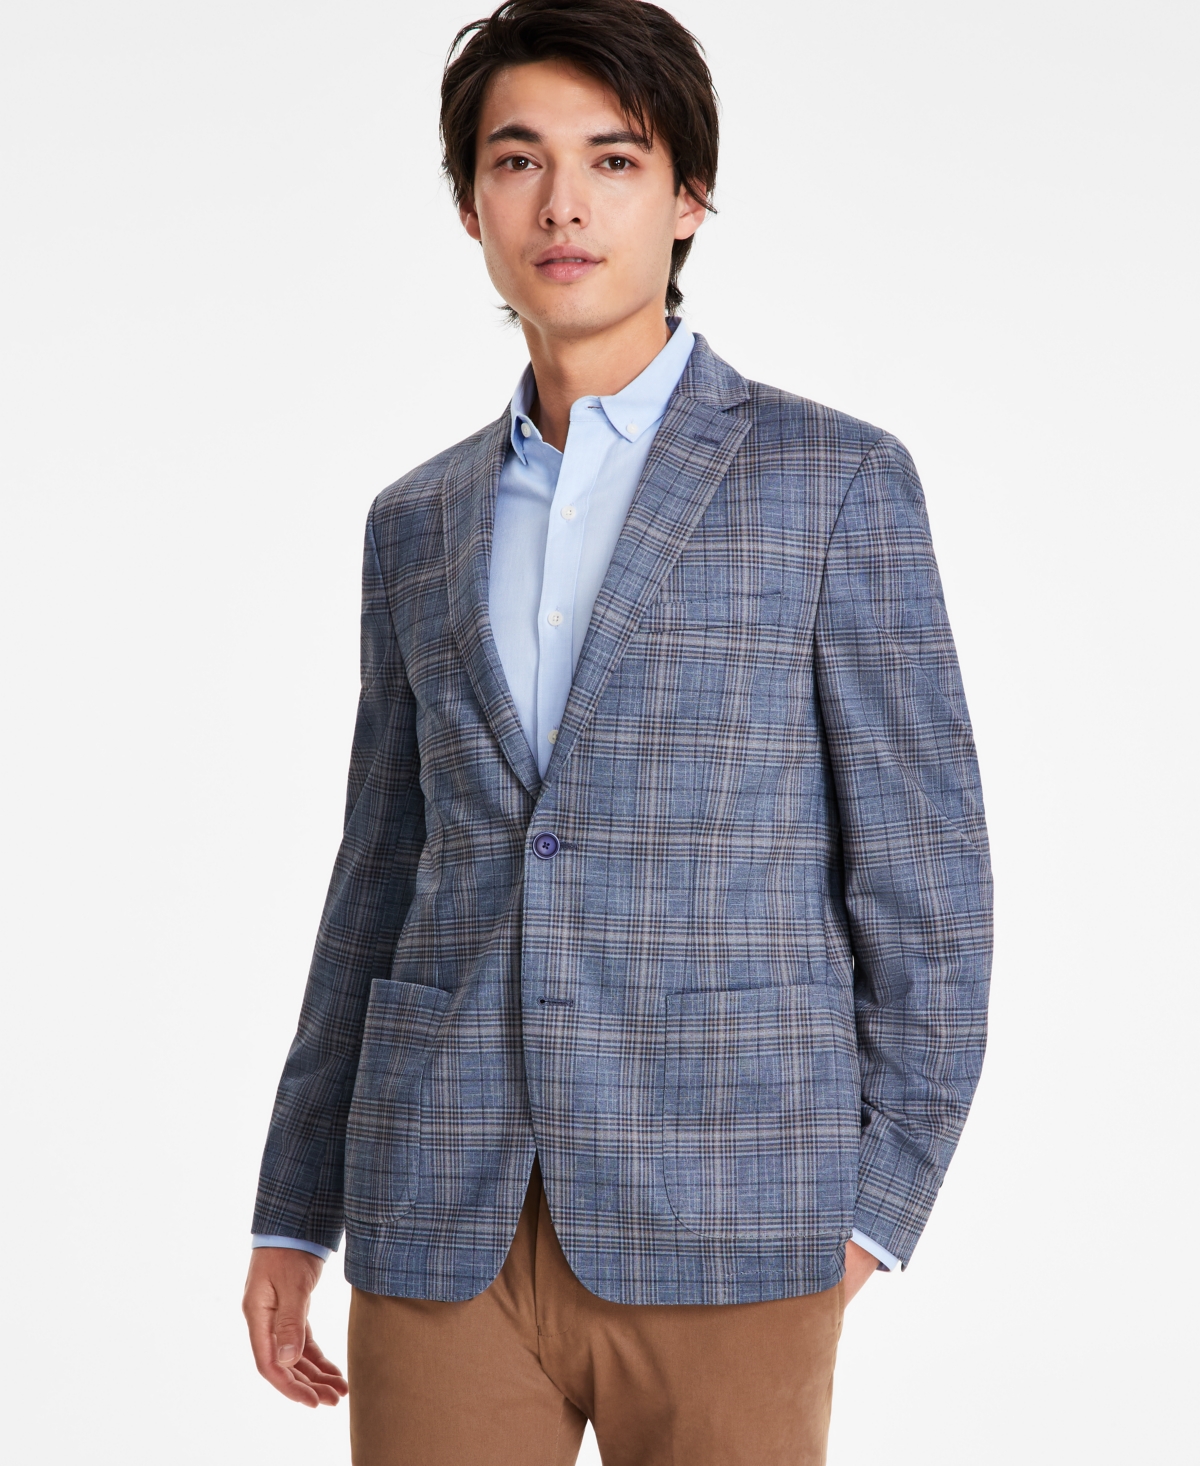 Men's Plaid Knit Slim-Fit Sport Coat, Created for Macy's - Blue Tan